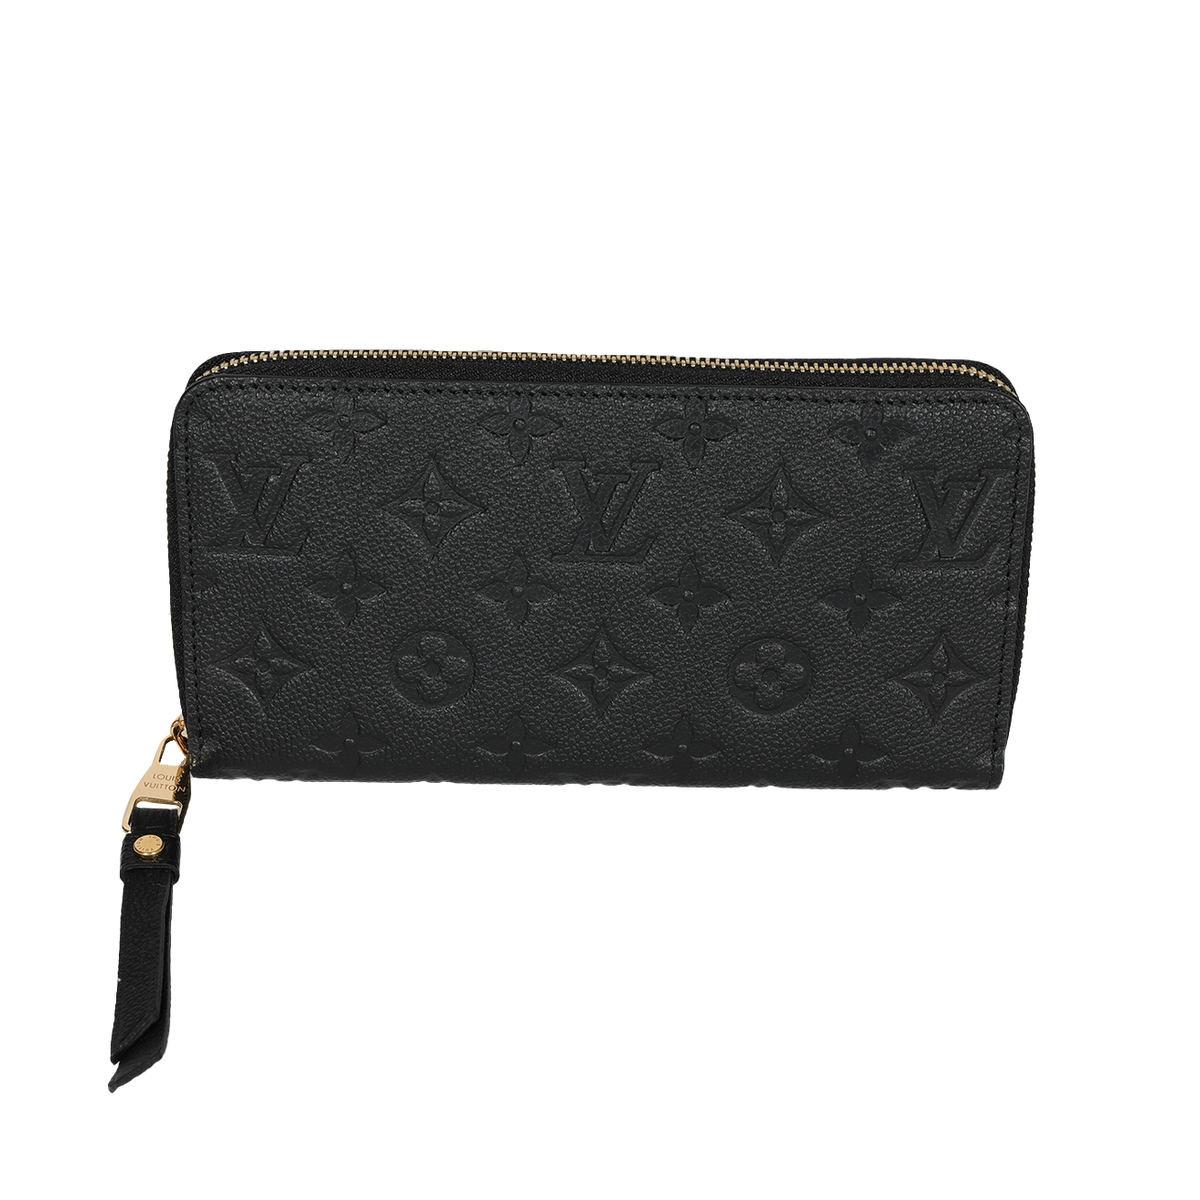 Louis Vuitton LV Monogram Empreinte Leather Zippy Wallet - Green